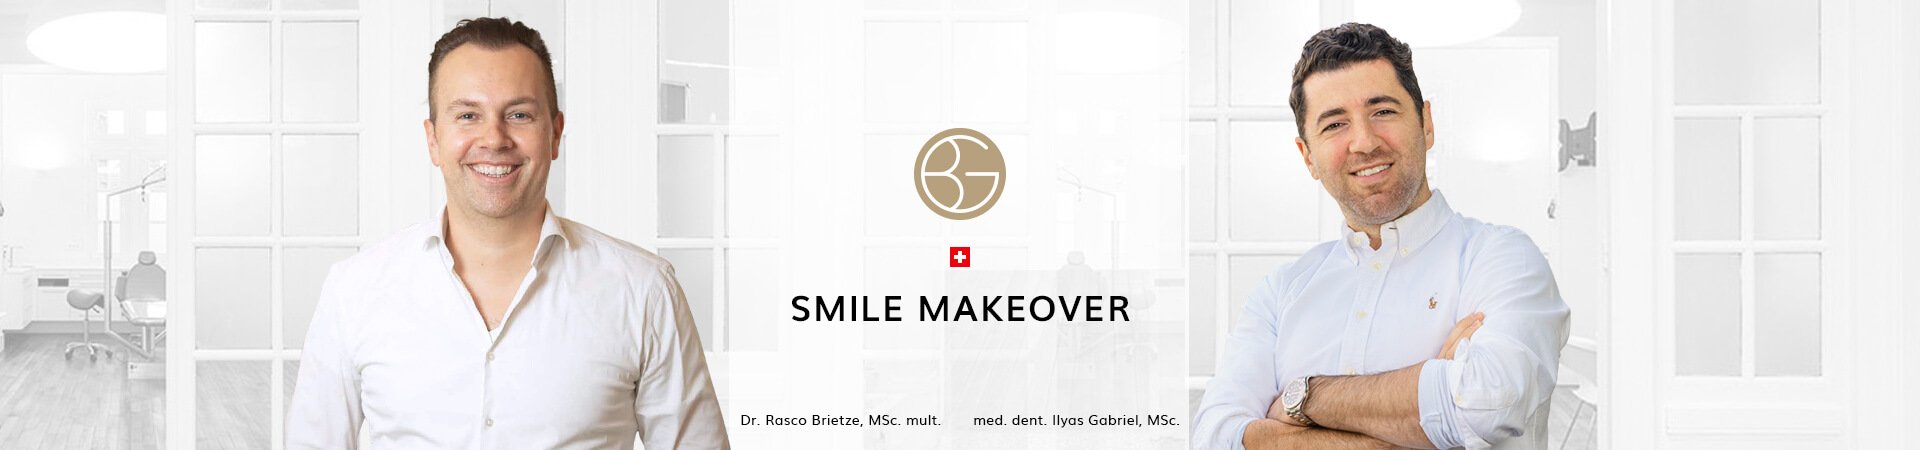 Smile Makeover, Zahnärzte Ebmatingen, Dr. Brietze & Dr. Gabriel 